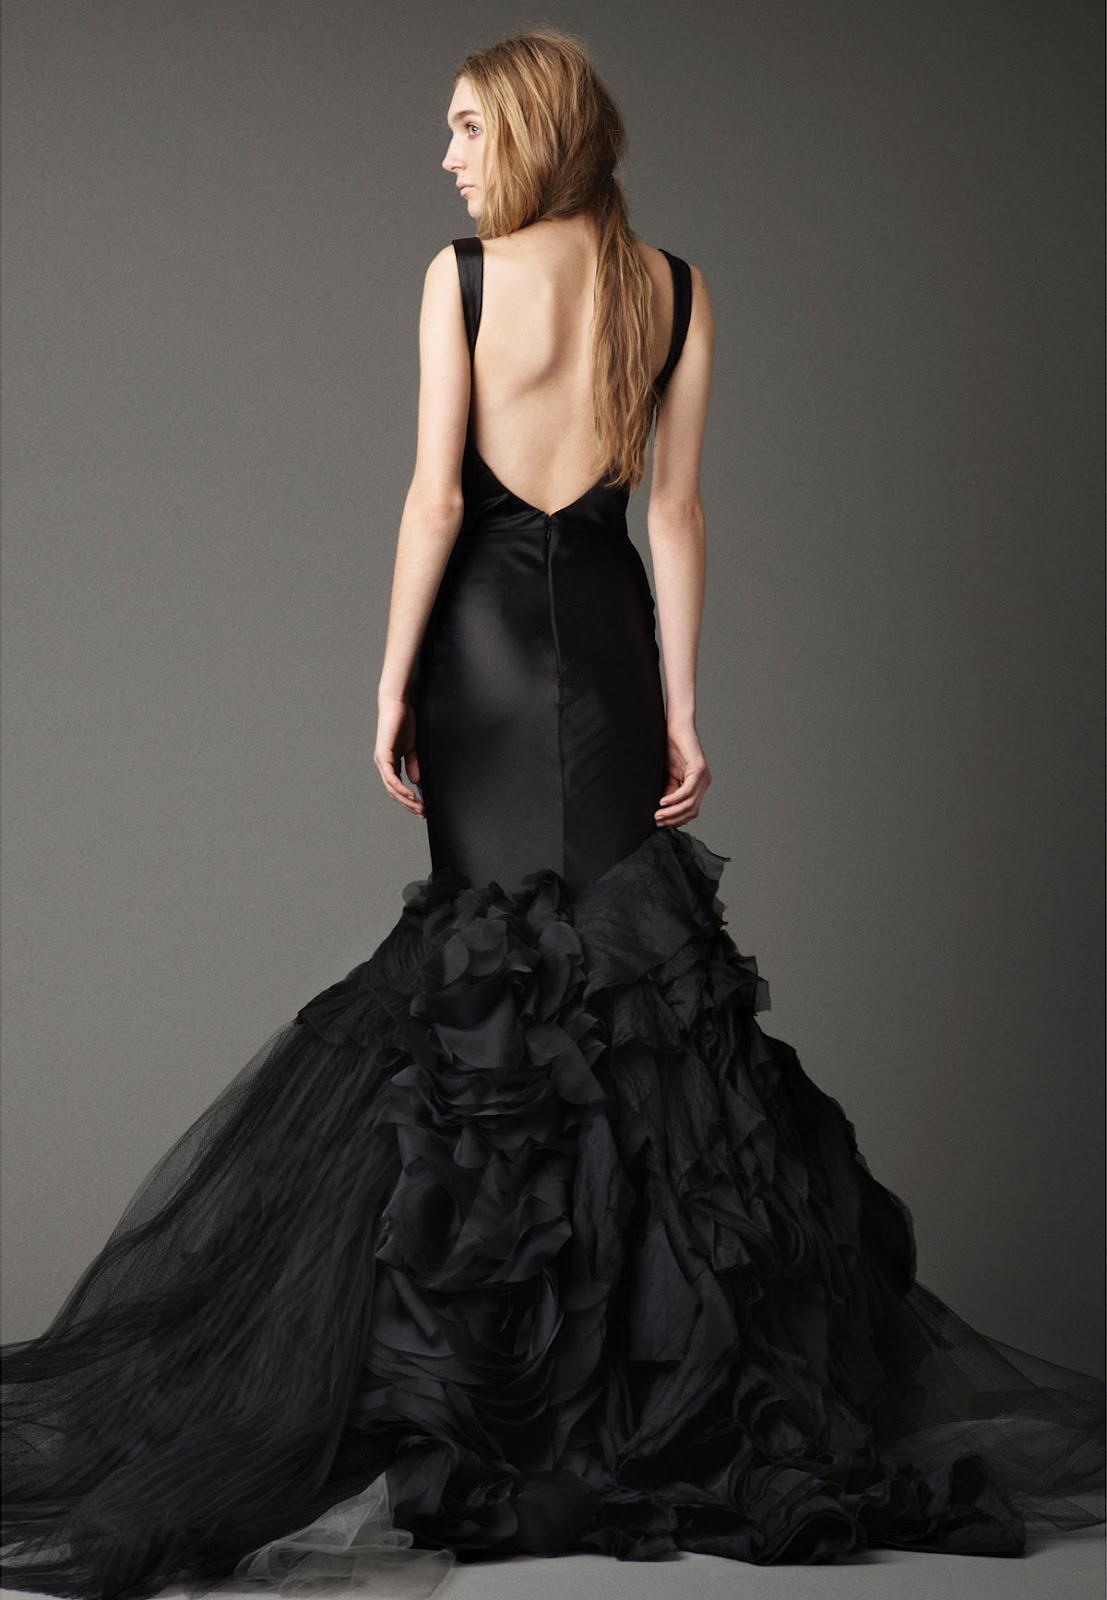 CJNT Wedding Inspirations: Vera Wang Fall 2012 Bridal Gown Collection ...